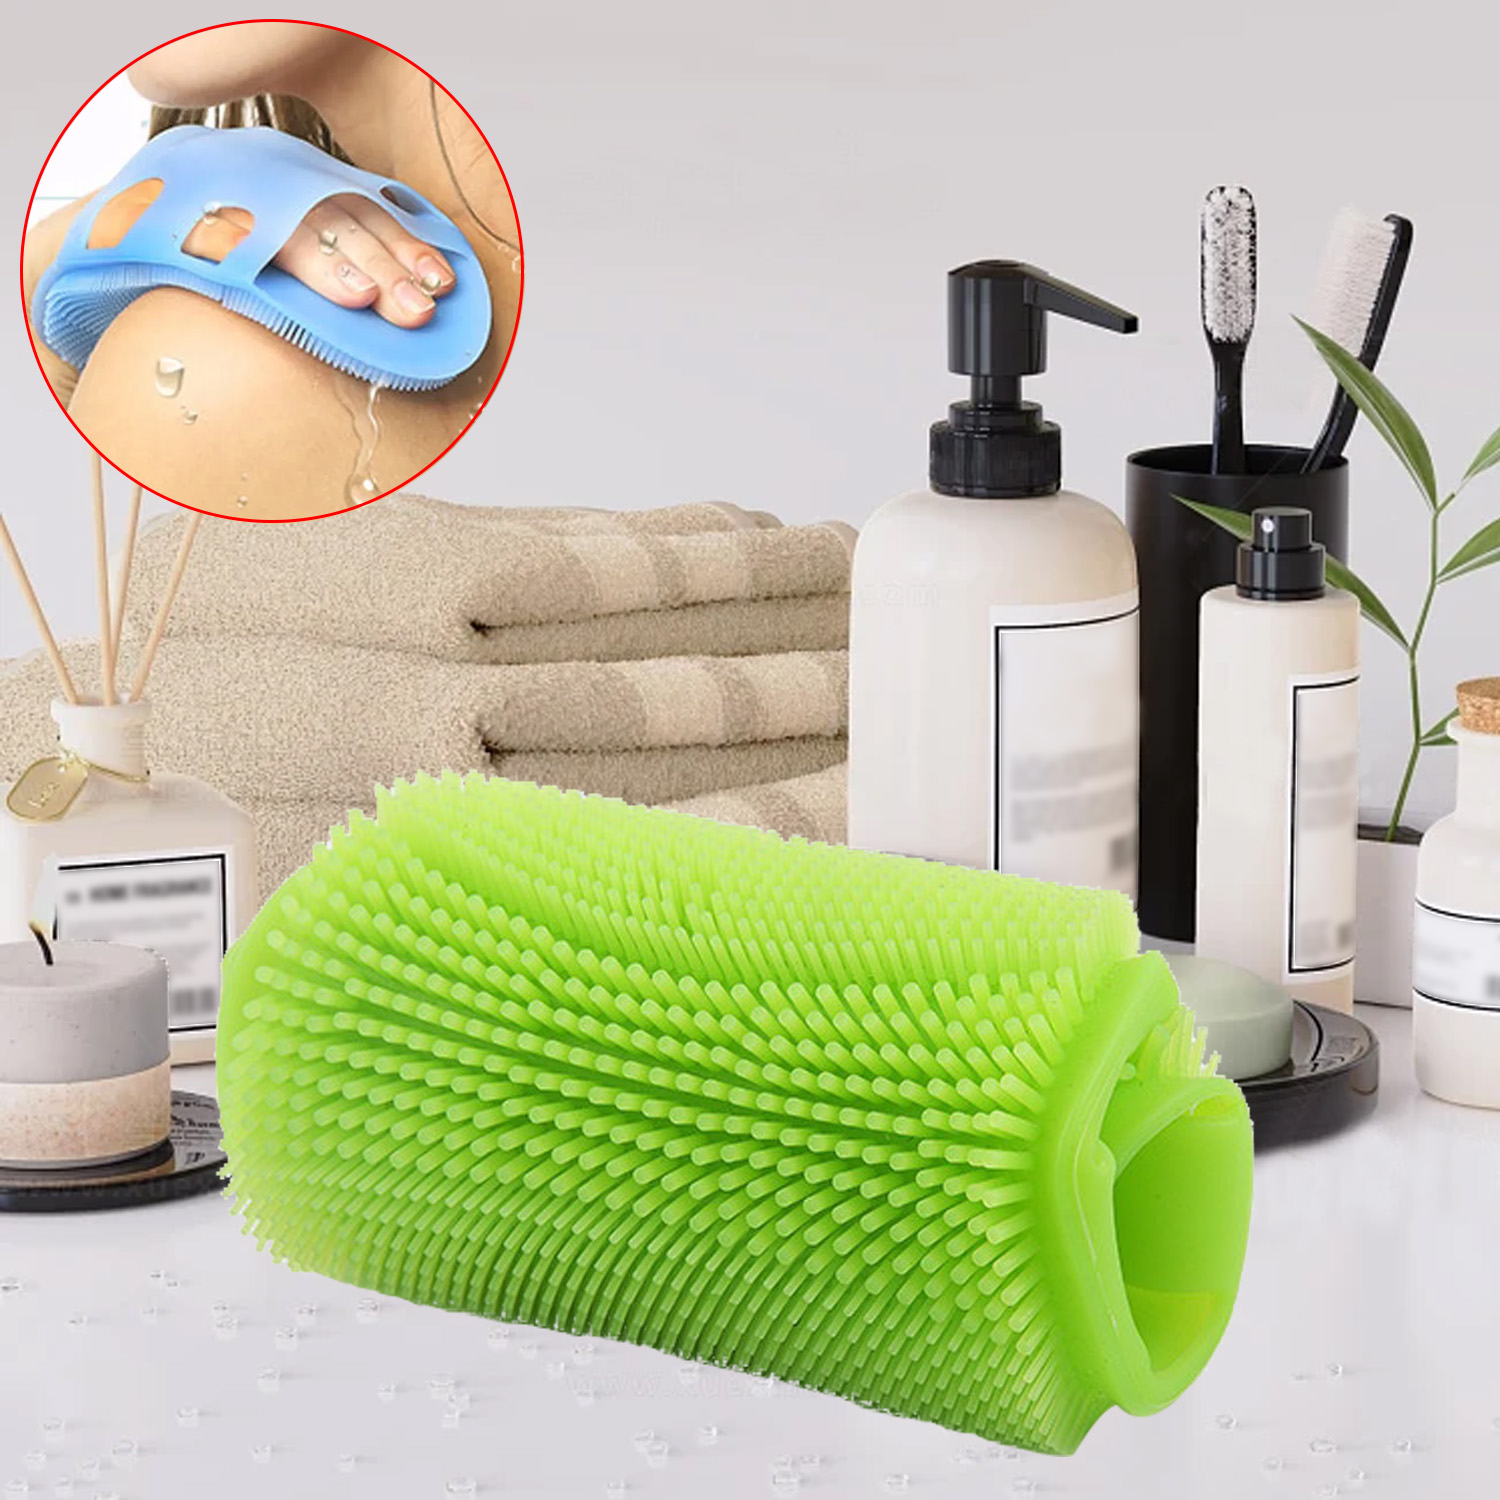 Cepillo de limpieza Facial, instrumento multifuncional de silicona para lavado de cara, cepillo de baño con cabezal de lavado